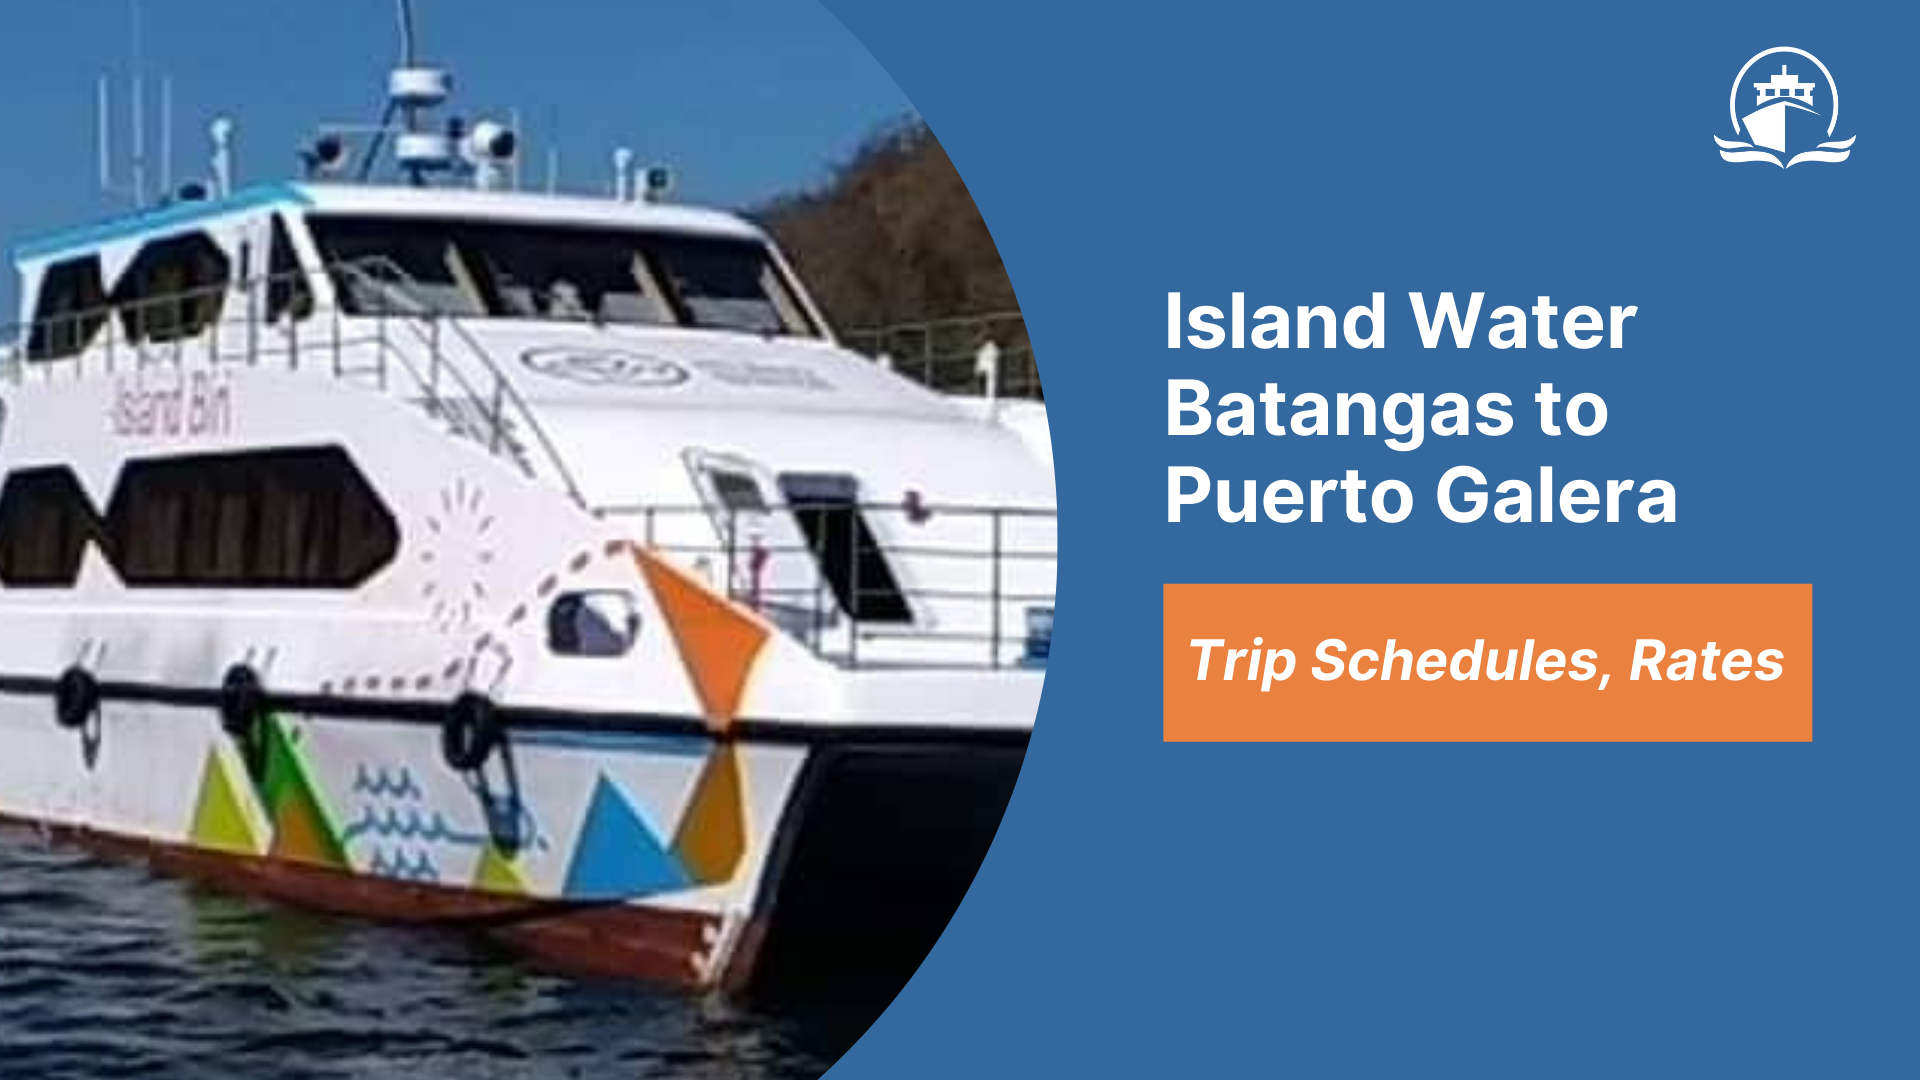 Island water batangas to puerto galera schedule